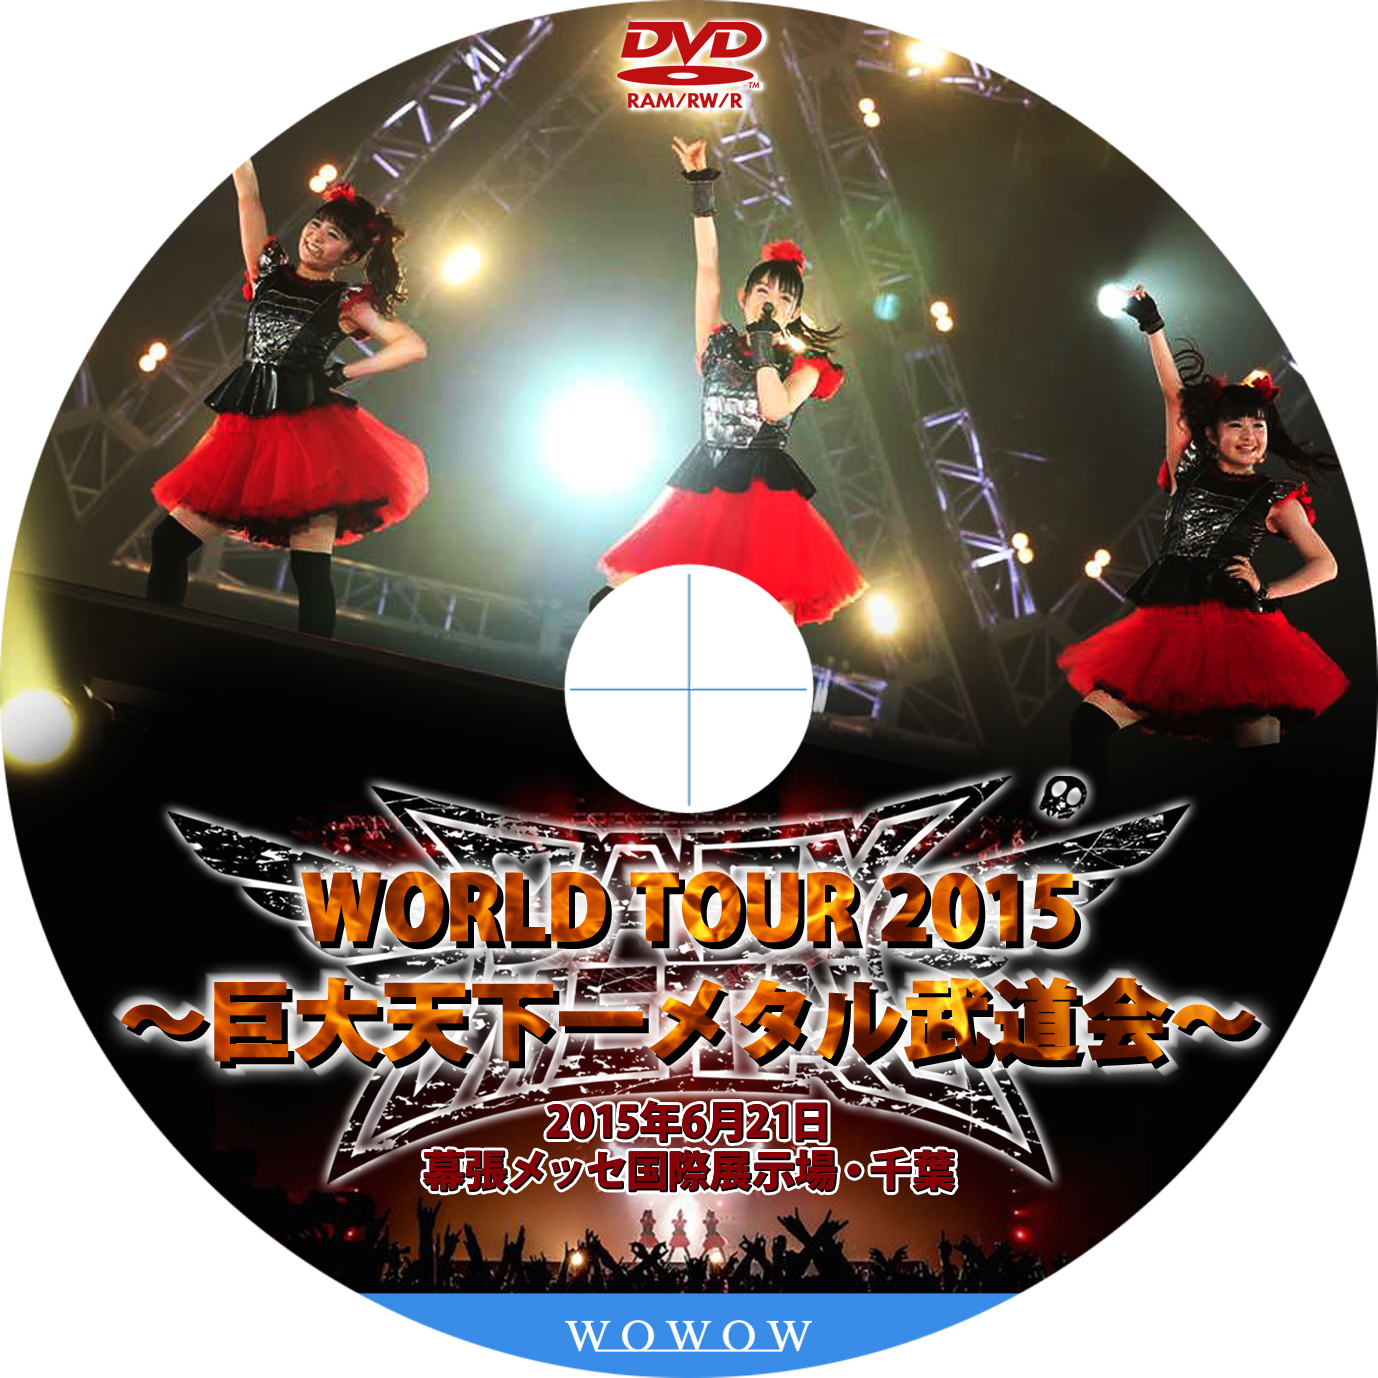 Babymetal World Tour 15 巨大天下一メタル武道会 Tomiio15音楽ライブdvd Blu Rayラベル